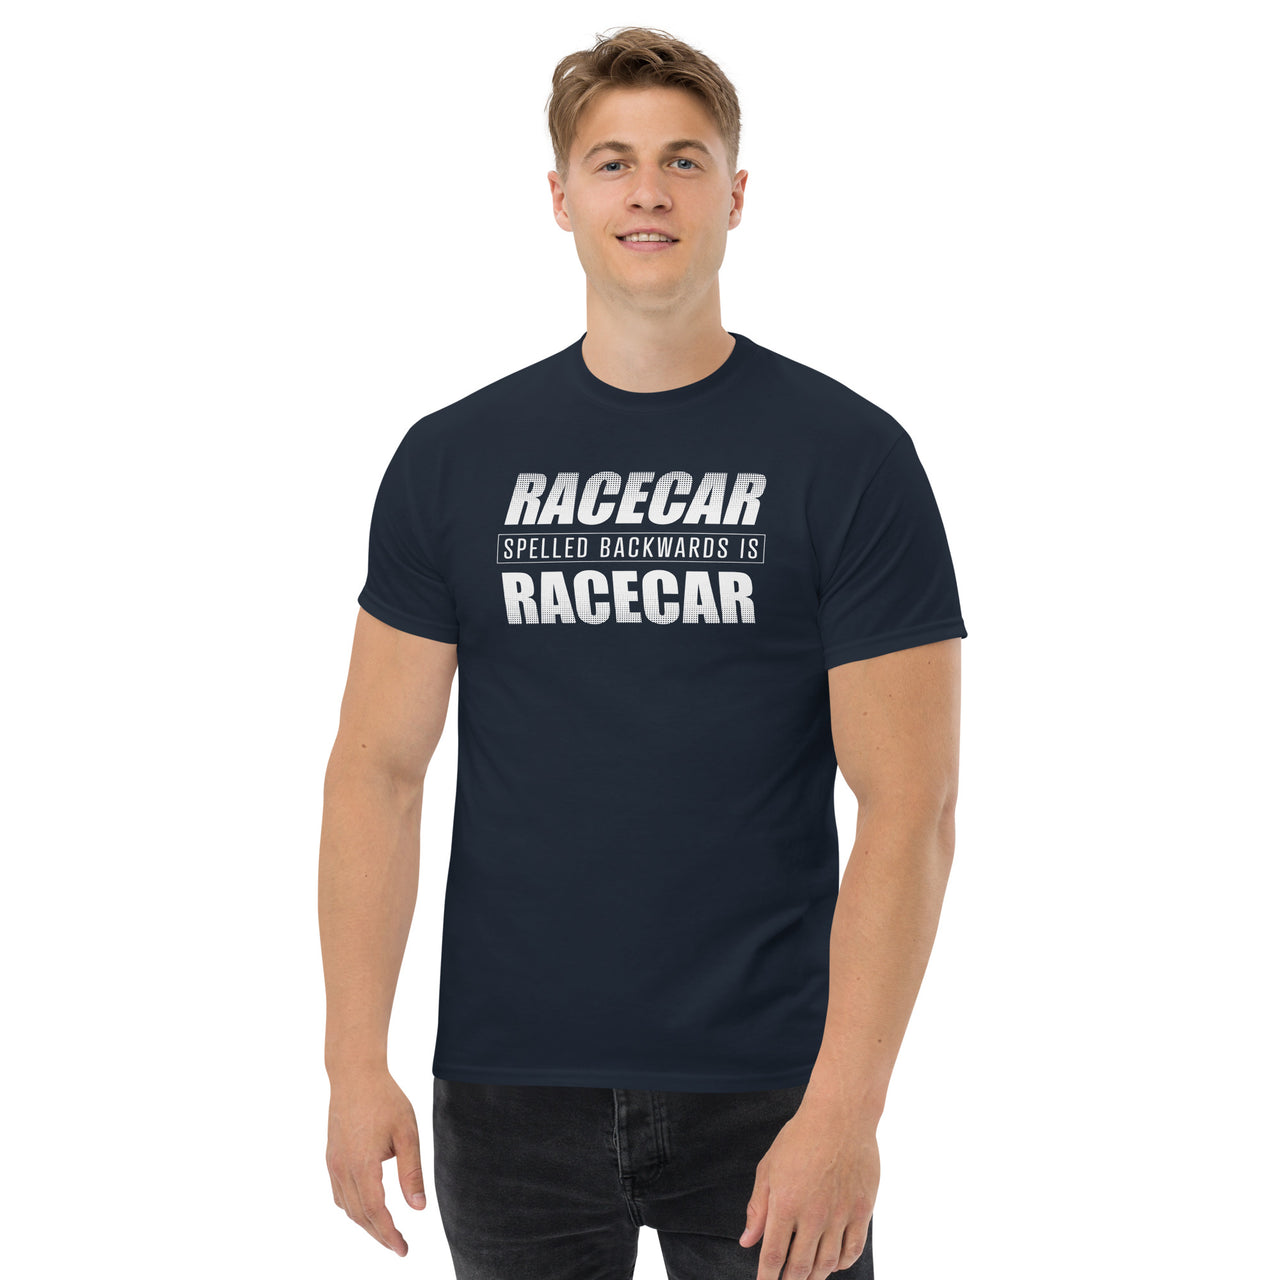 Funny Racecar Shirt, Car Enthusiast Gift, Drag Racing, or Racecar T-Shirt modeled in navy